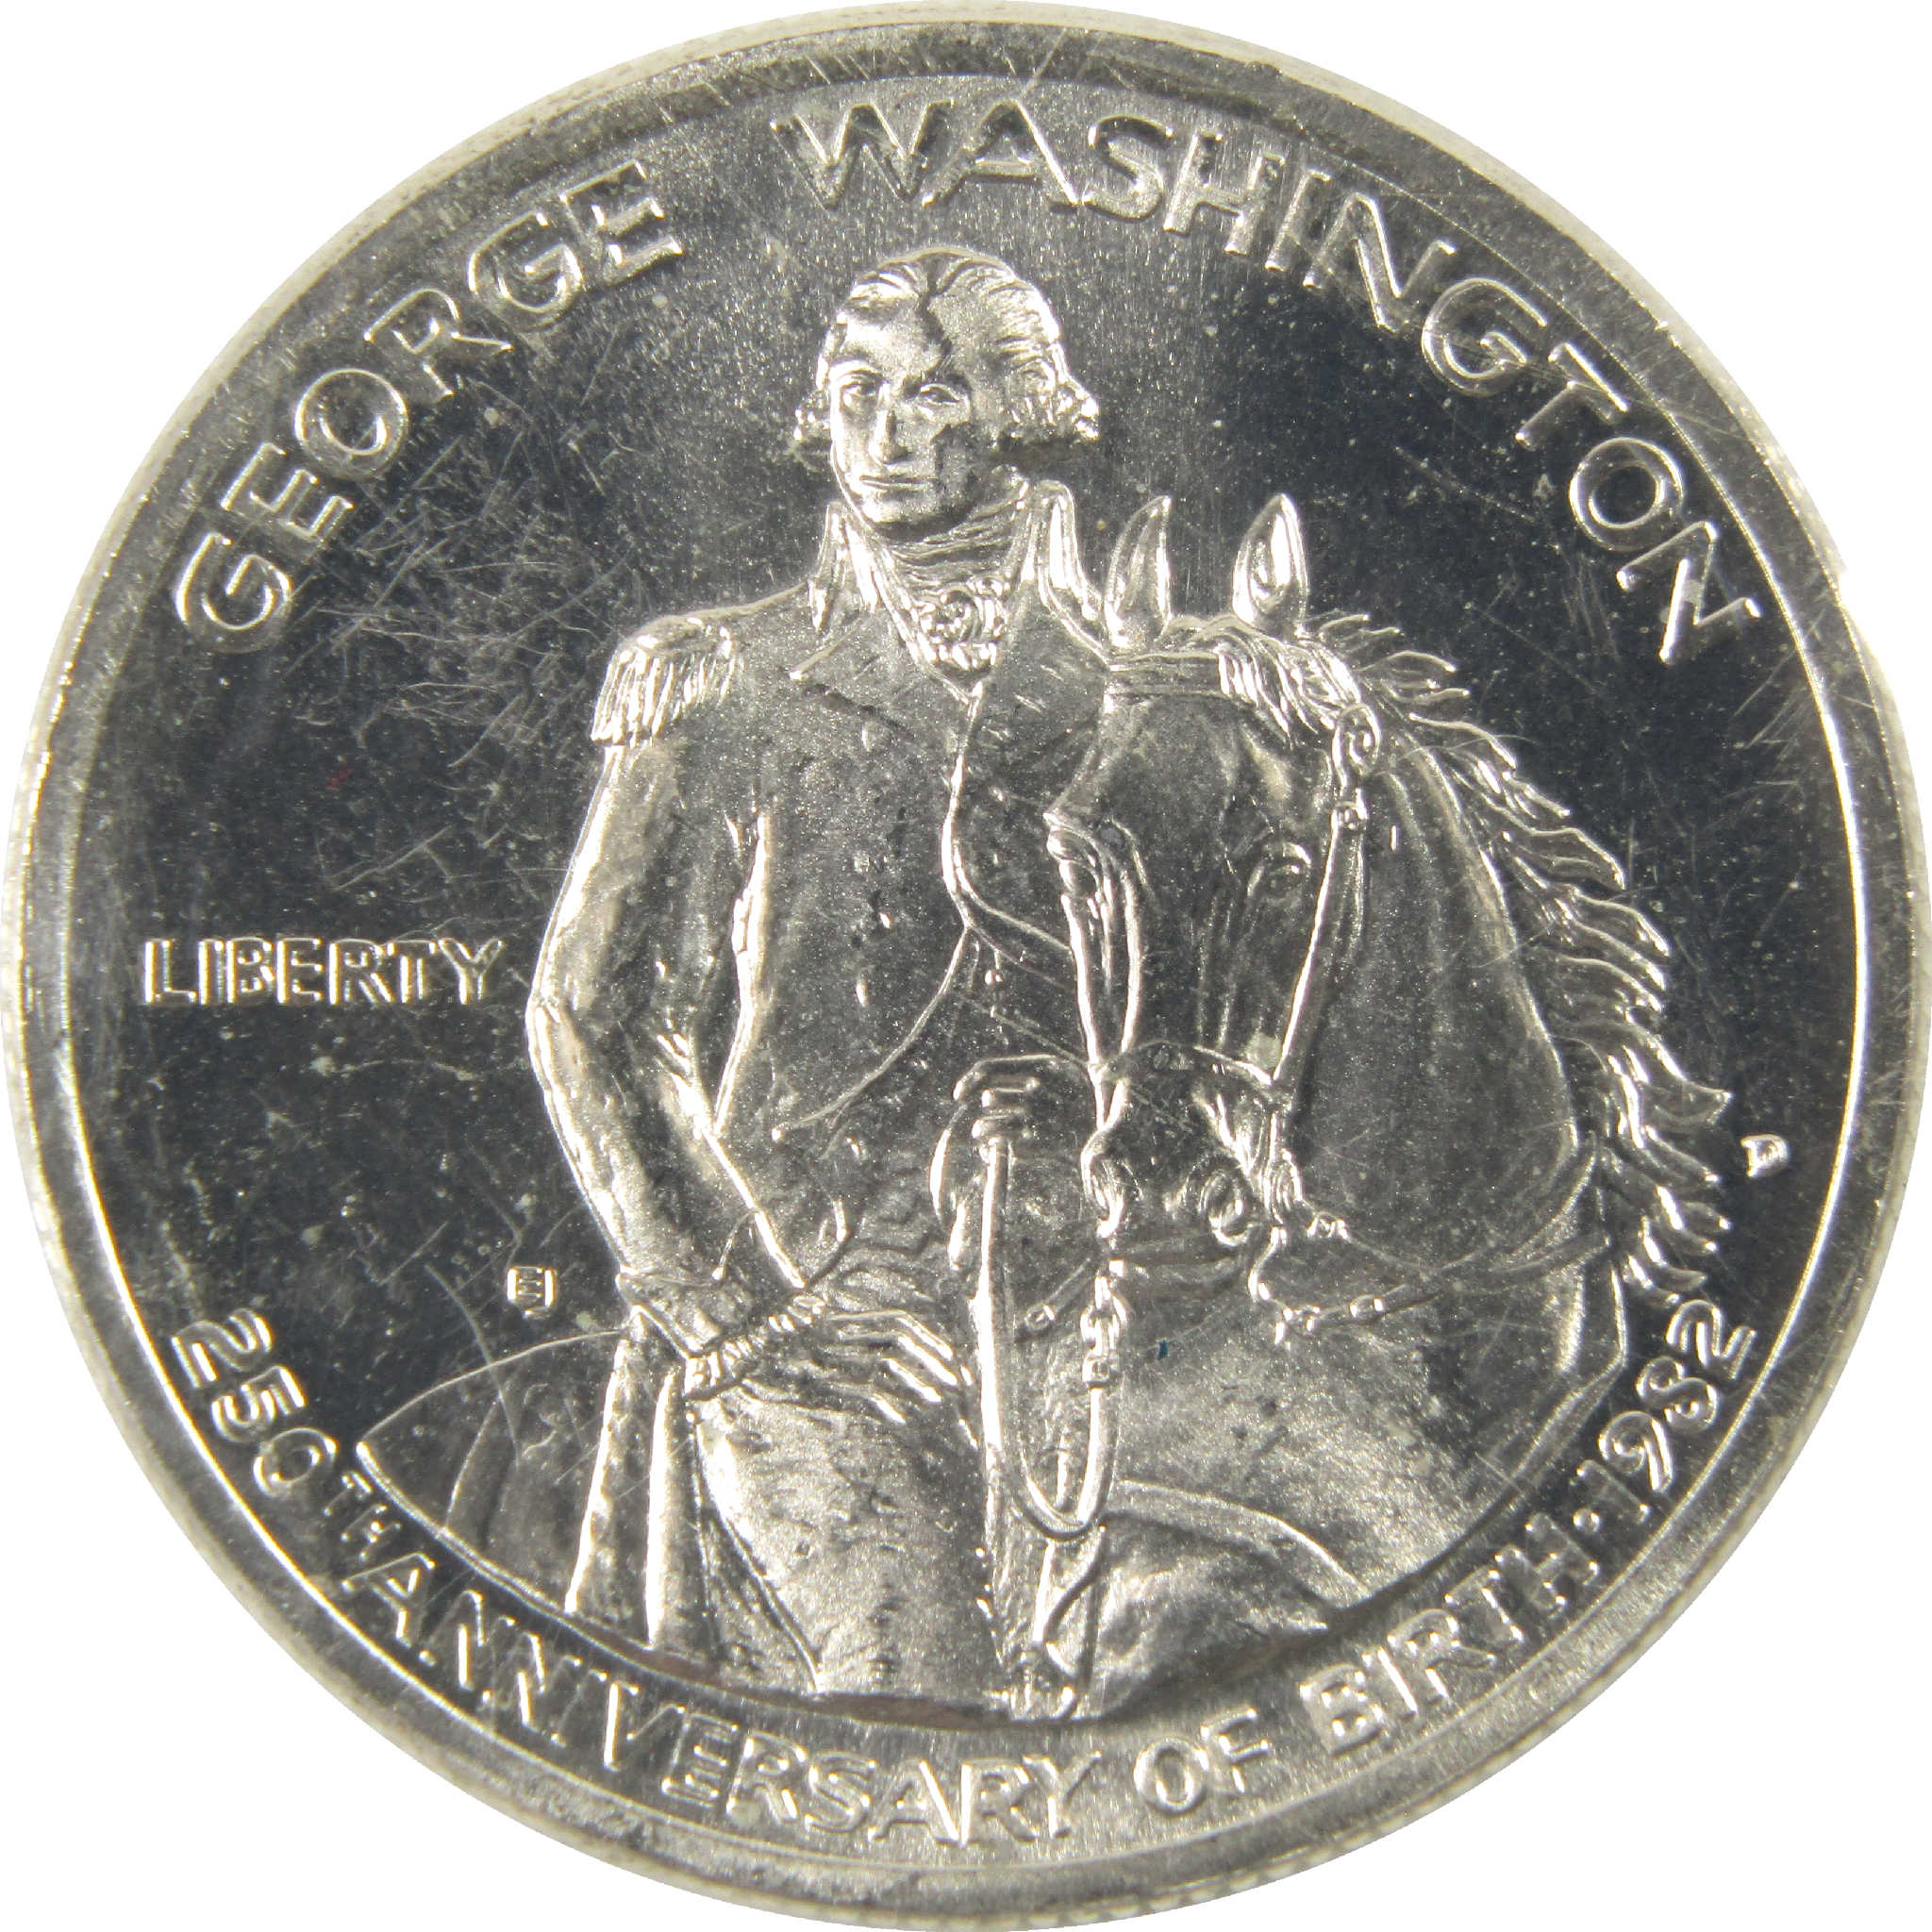 George Washington Commemorative 1982 D BU Uncirculated Silver 50c OGP